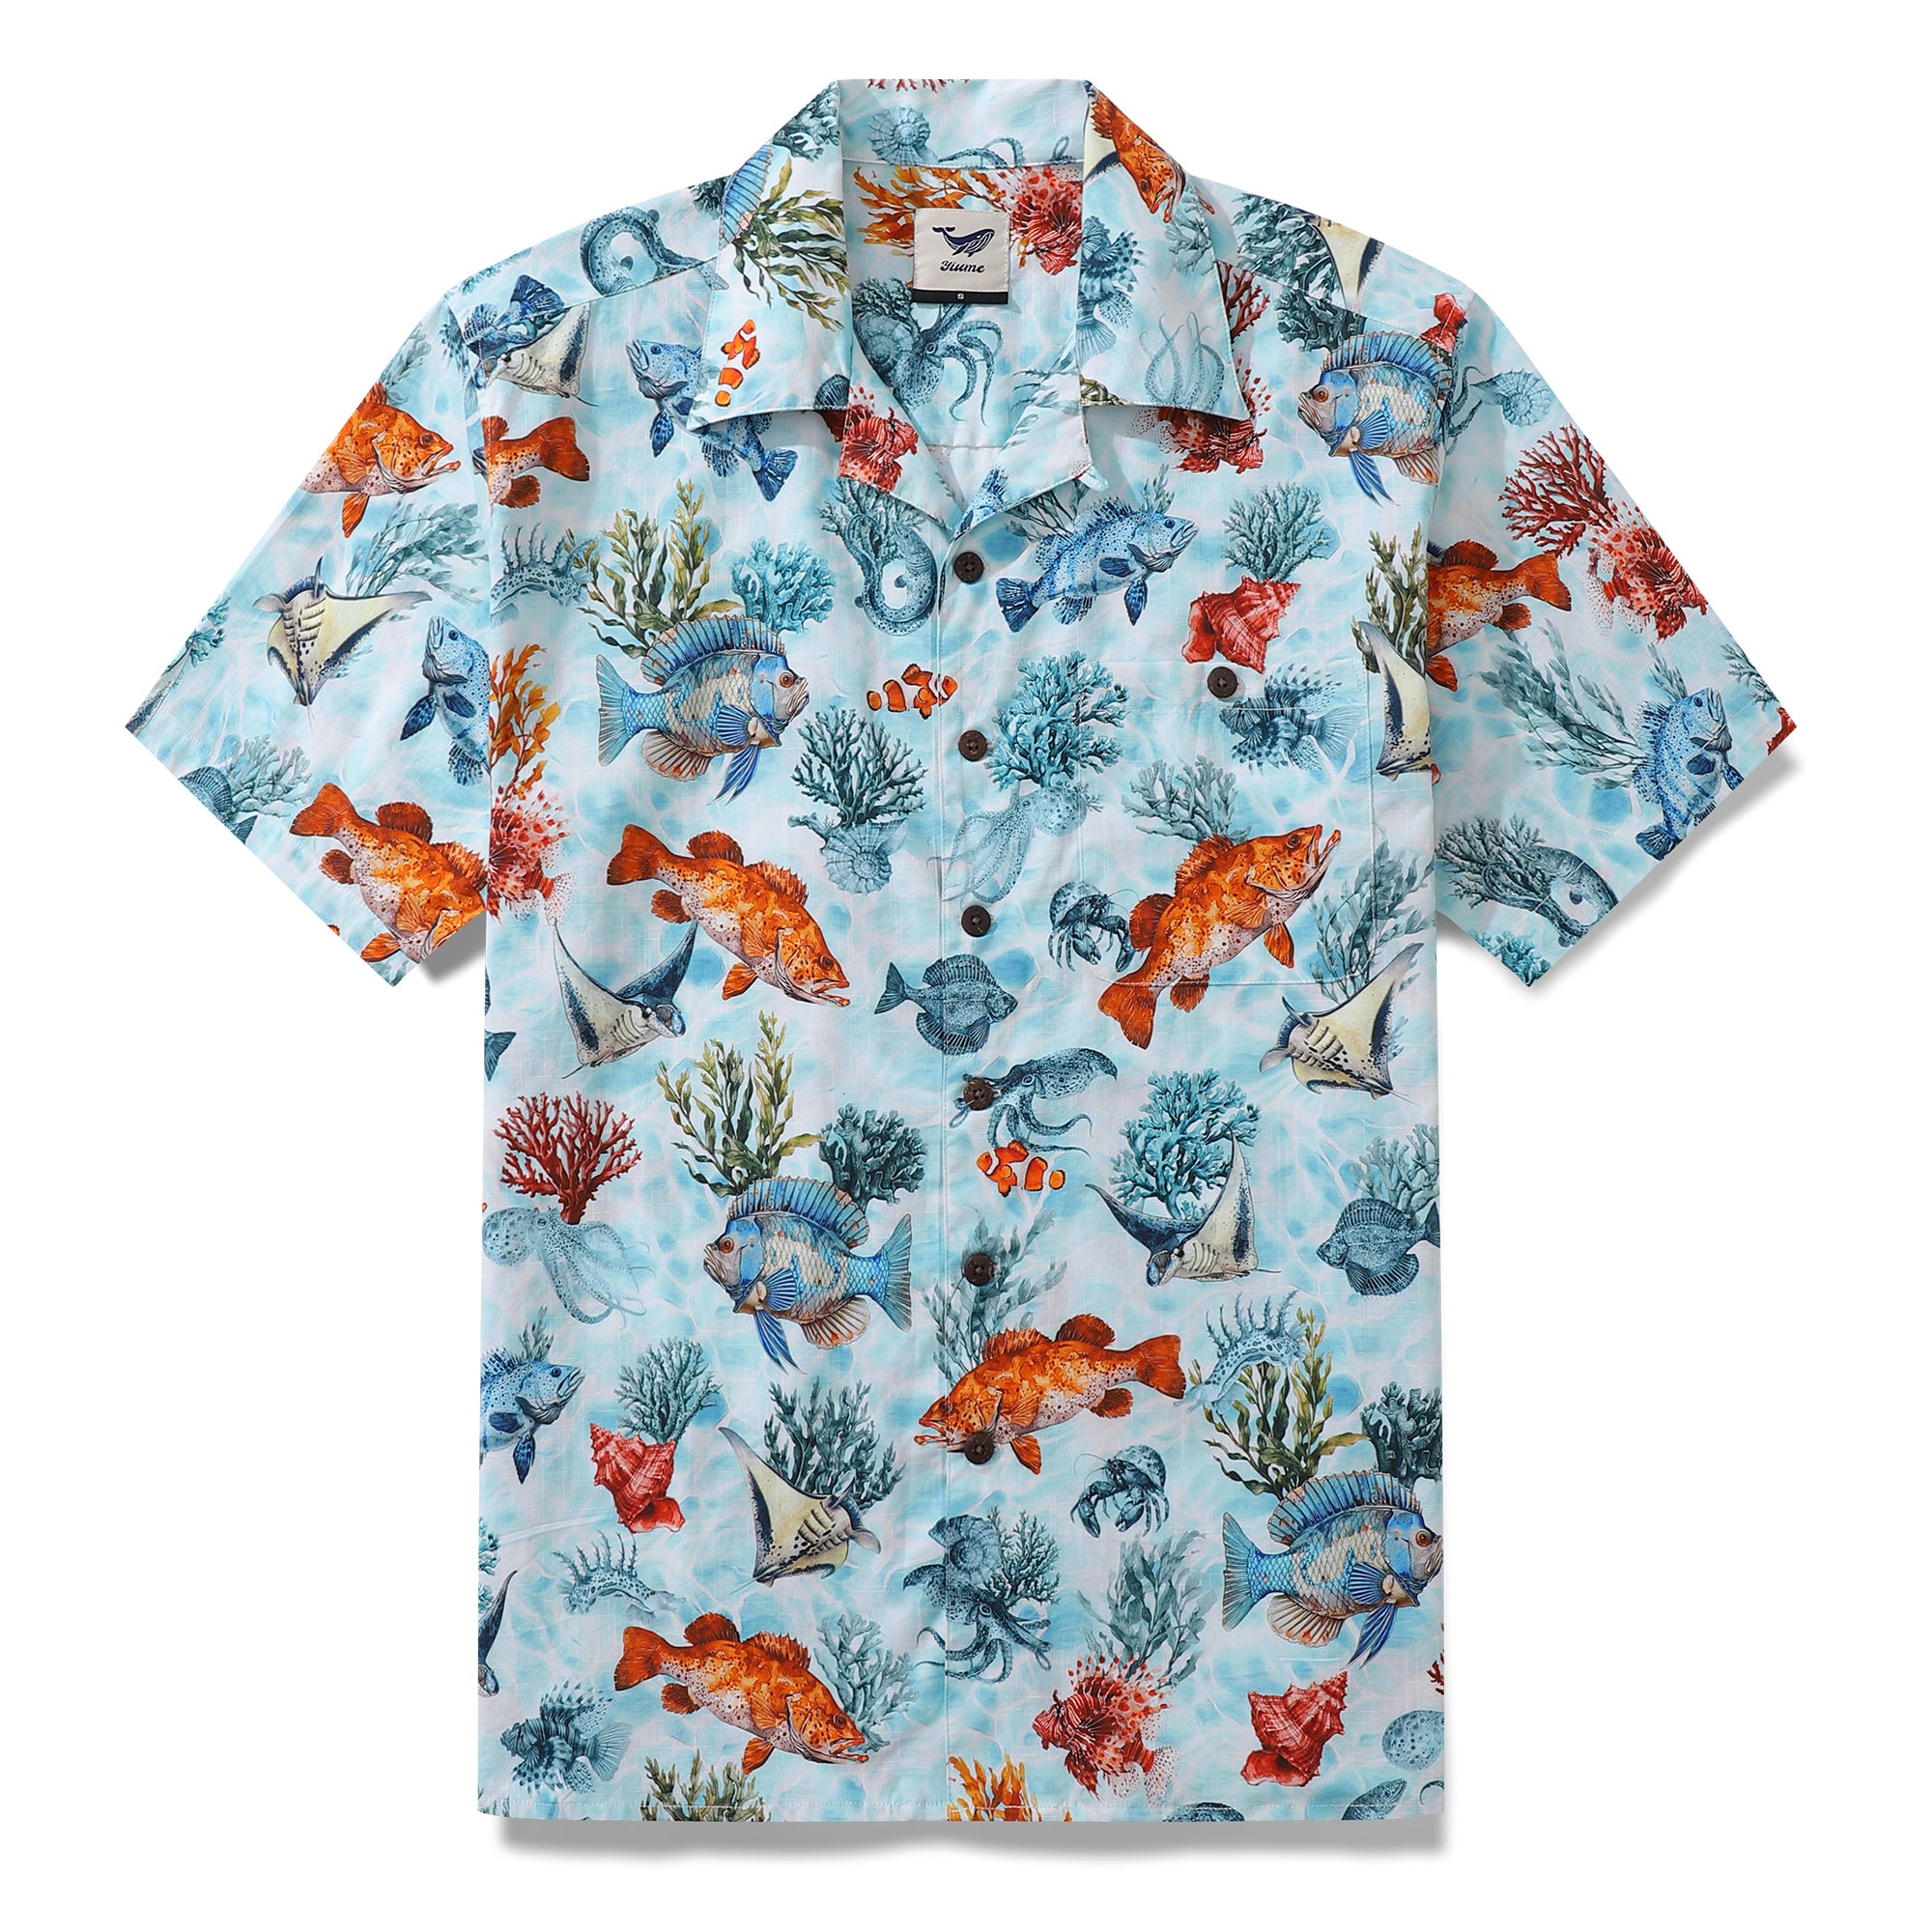 Bluey Hawaiian Shirt For Men The azure sea Shirt Camp Collar 100% Cotton Shirt